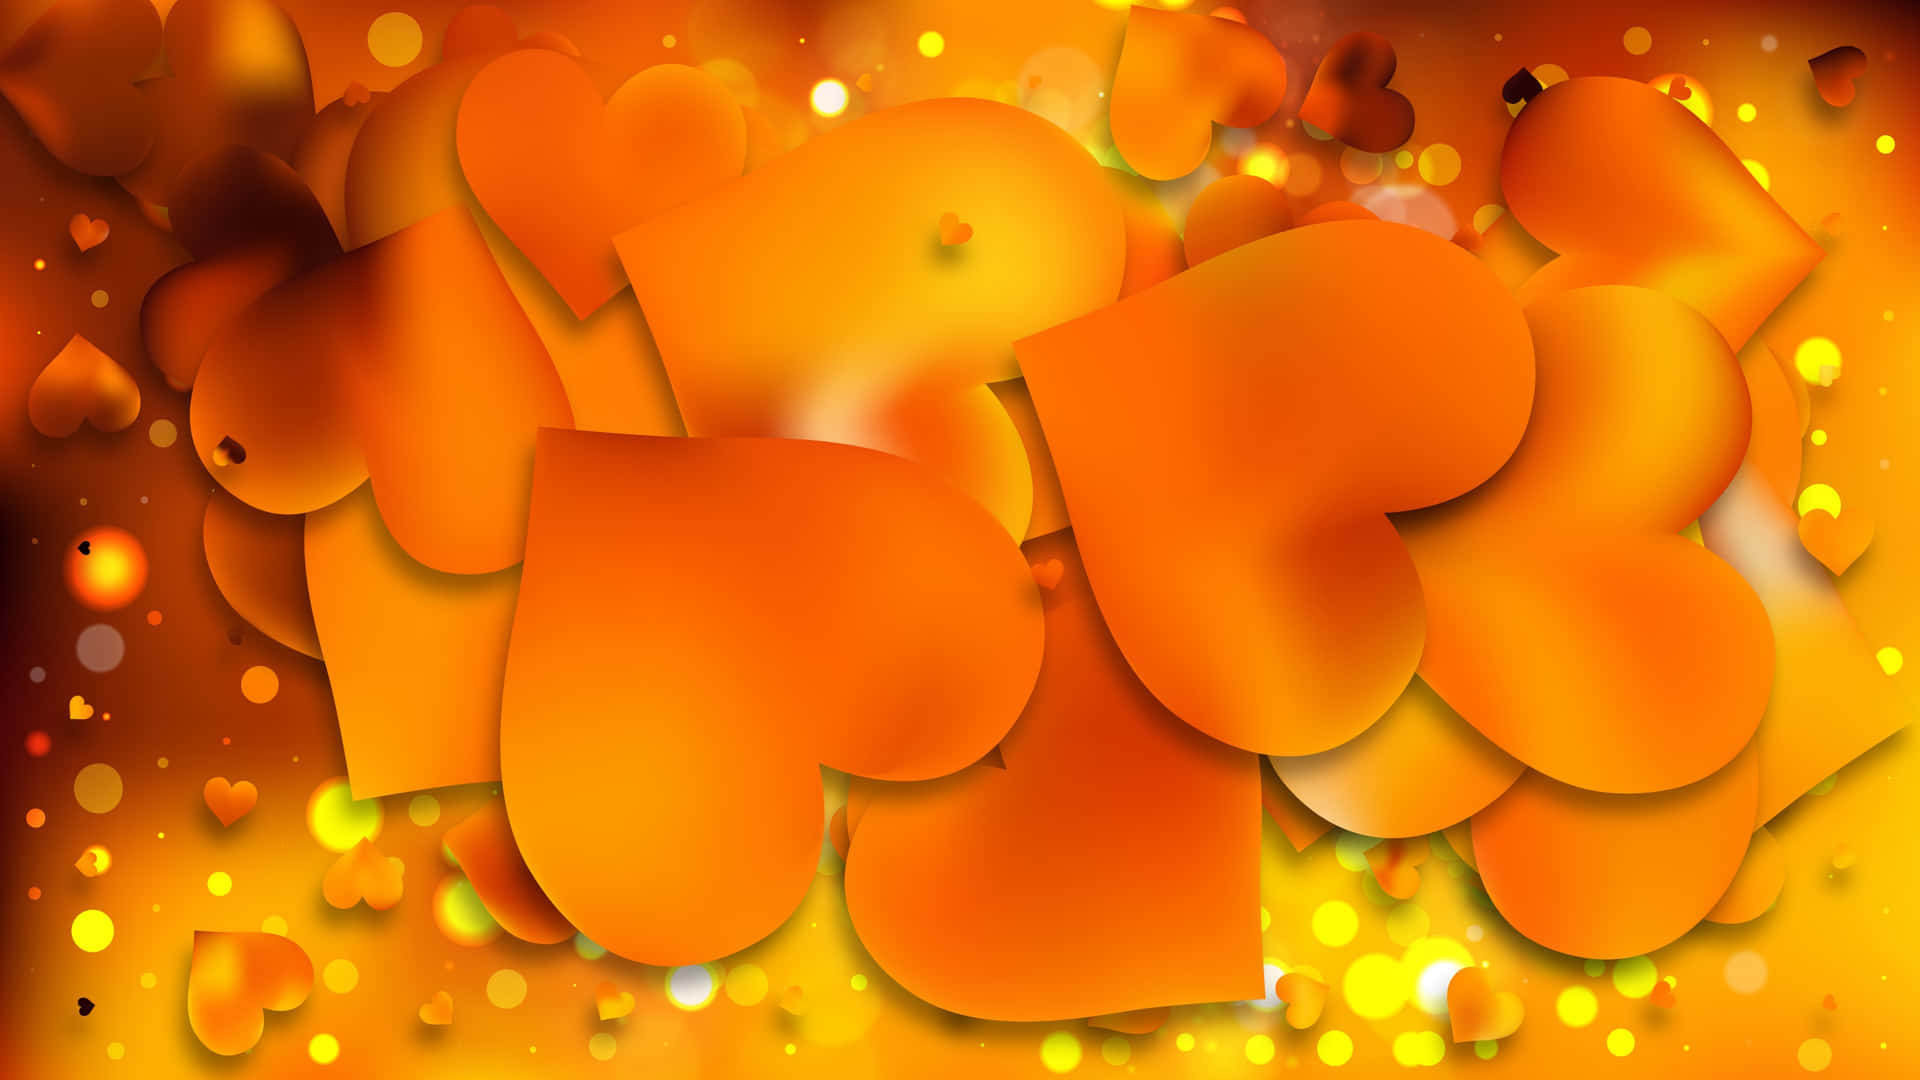 Caption: A Vibrant Orange Heart Symbolizing Love and Warmth Wallpaper